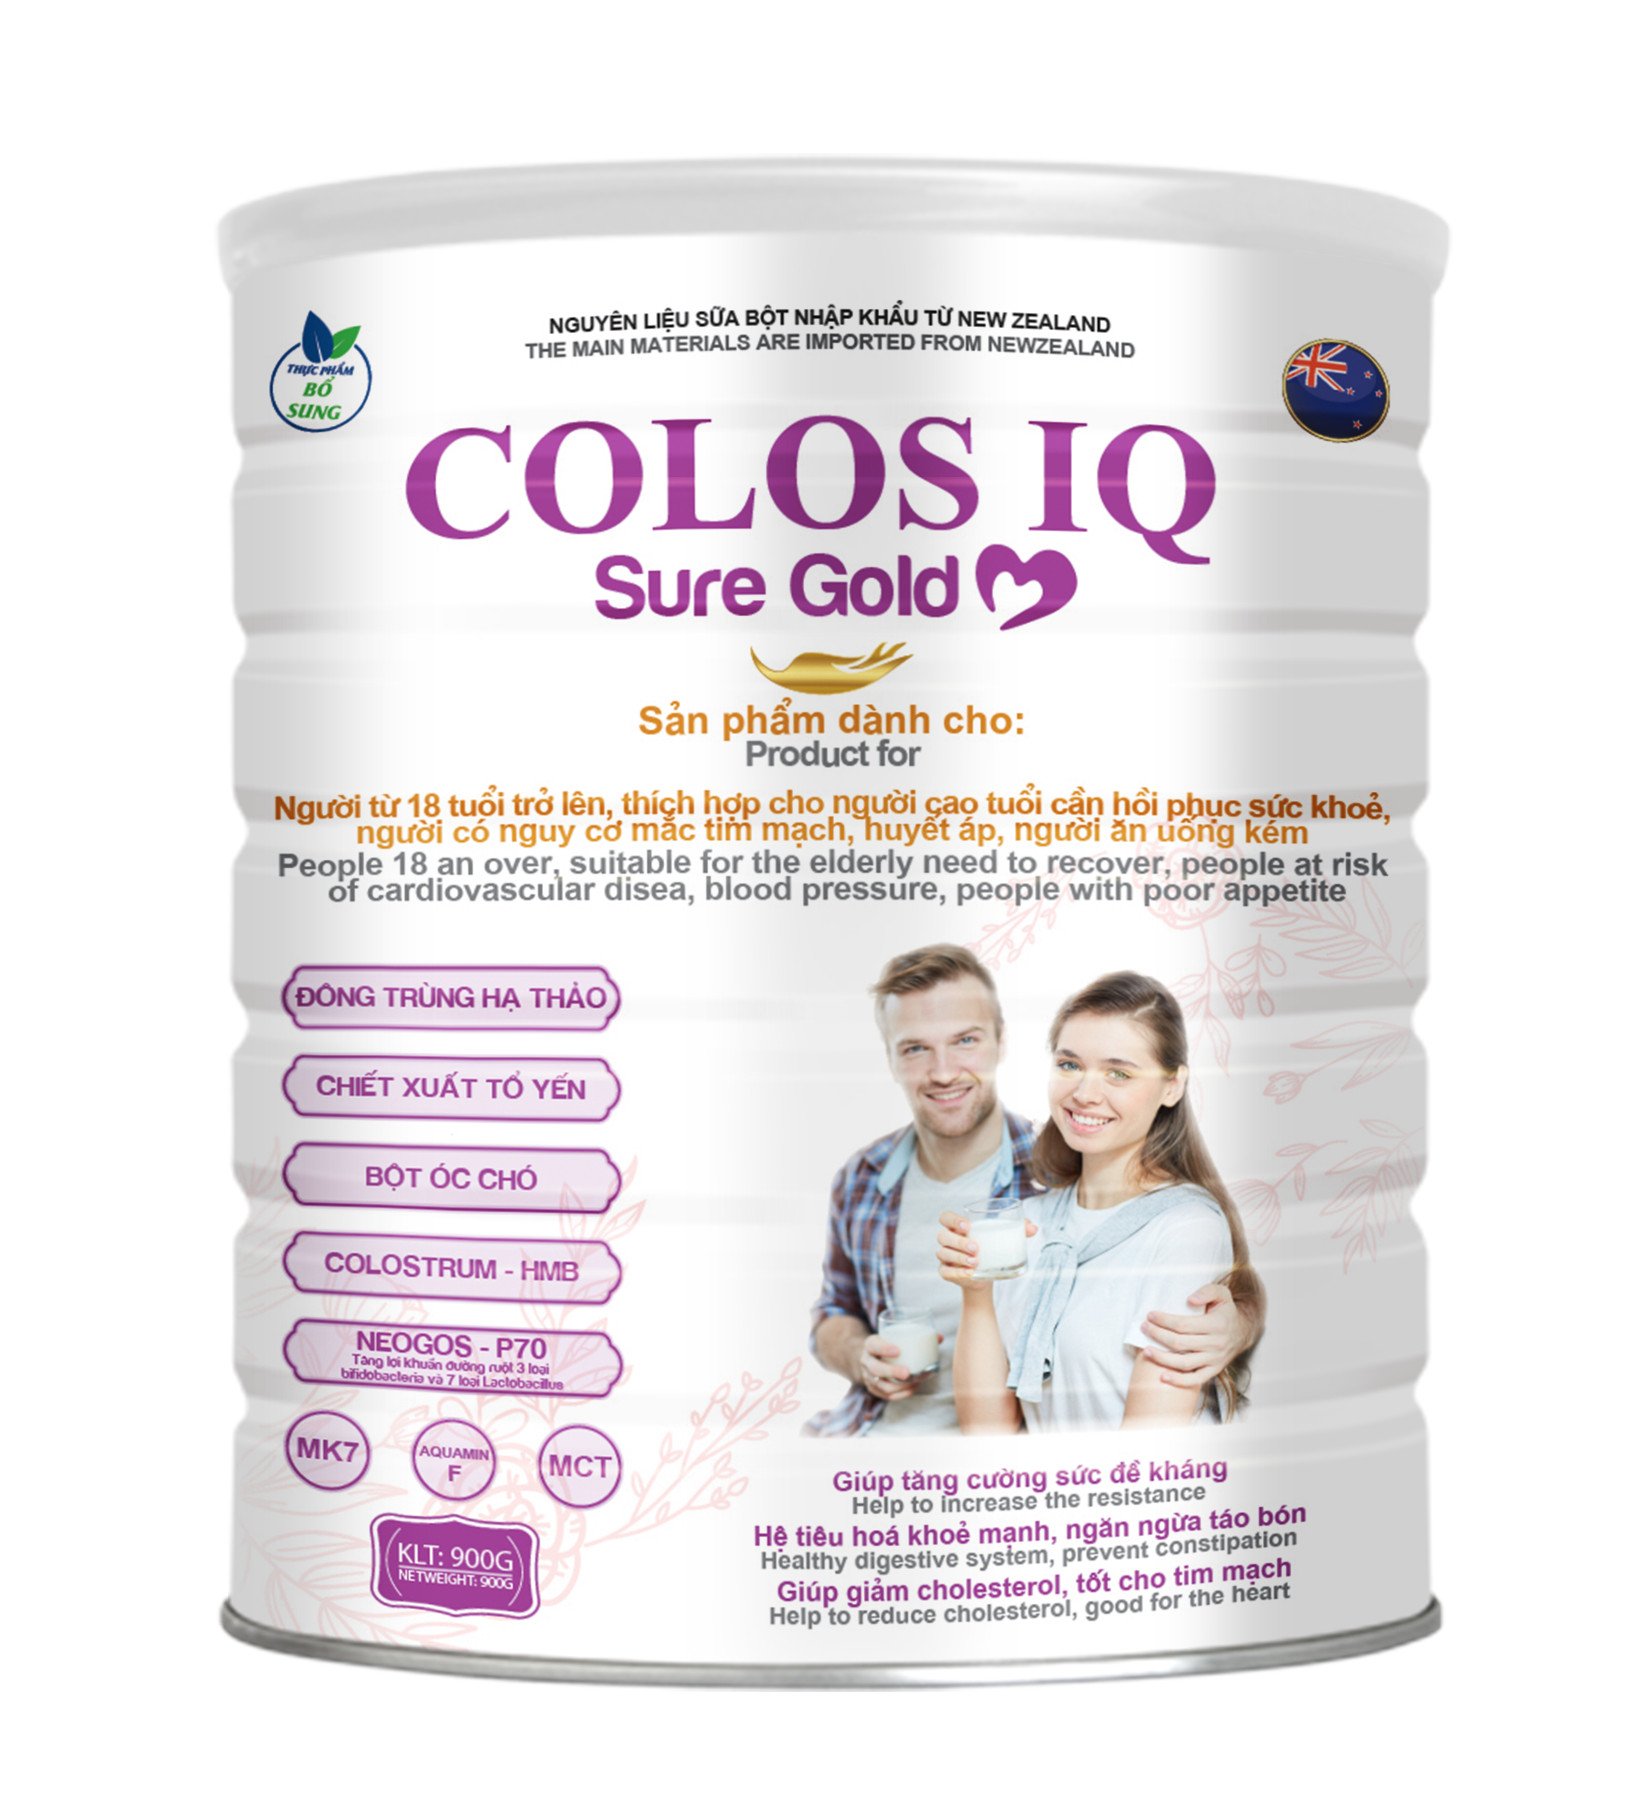 SỮA DINH DƯỠNG COLOS IQ SURE GOLD 900G